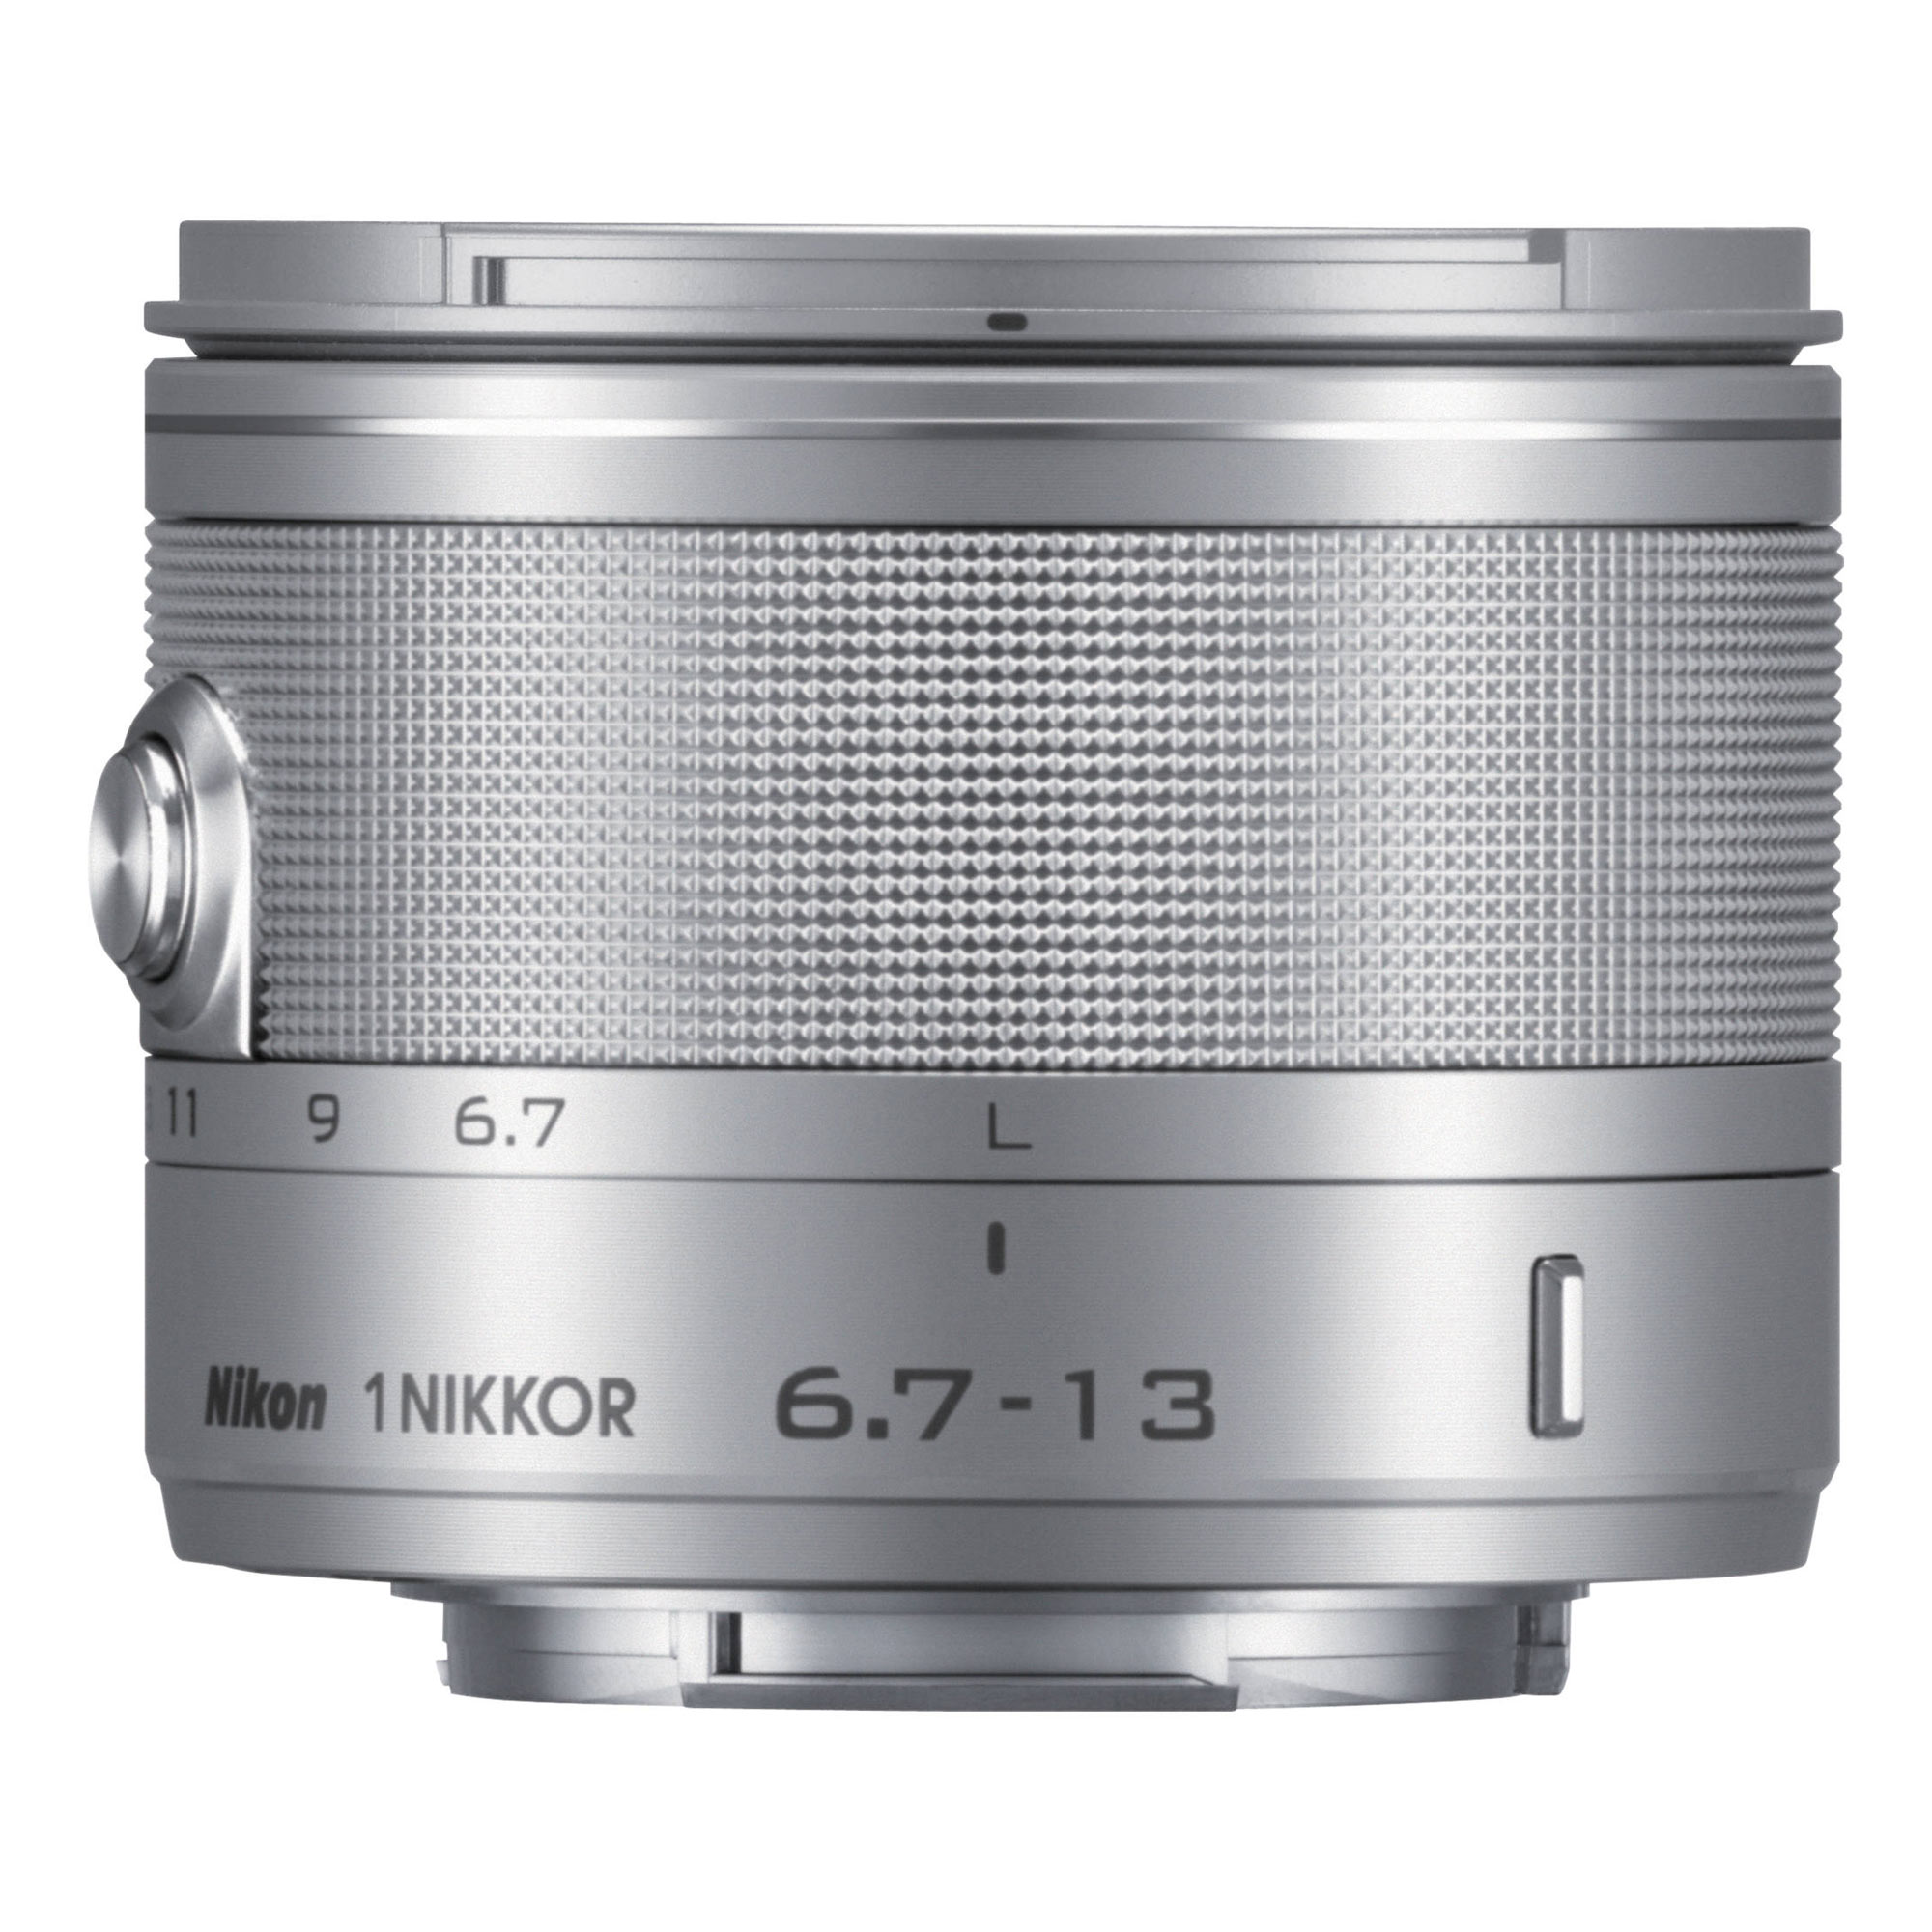 Nikon 1 Nikkor 6.7-13mm f/3.5-5.6 VR Lens (Silver) - Picture 1 of 1